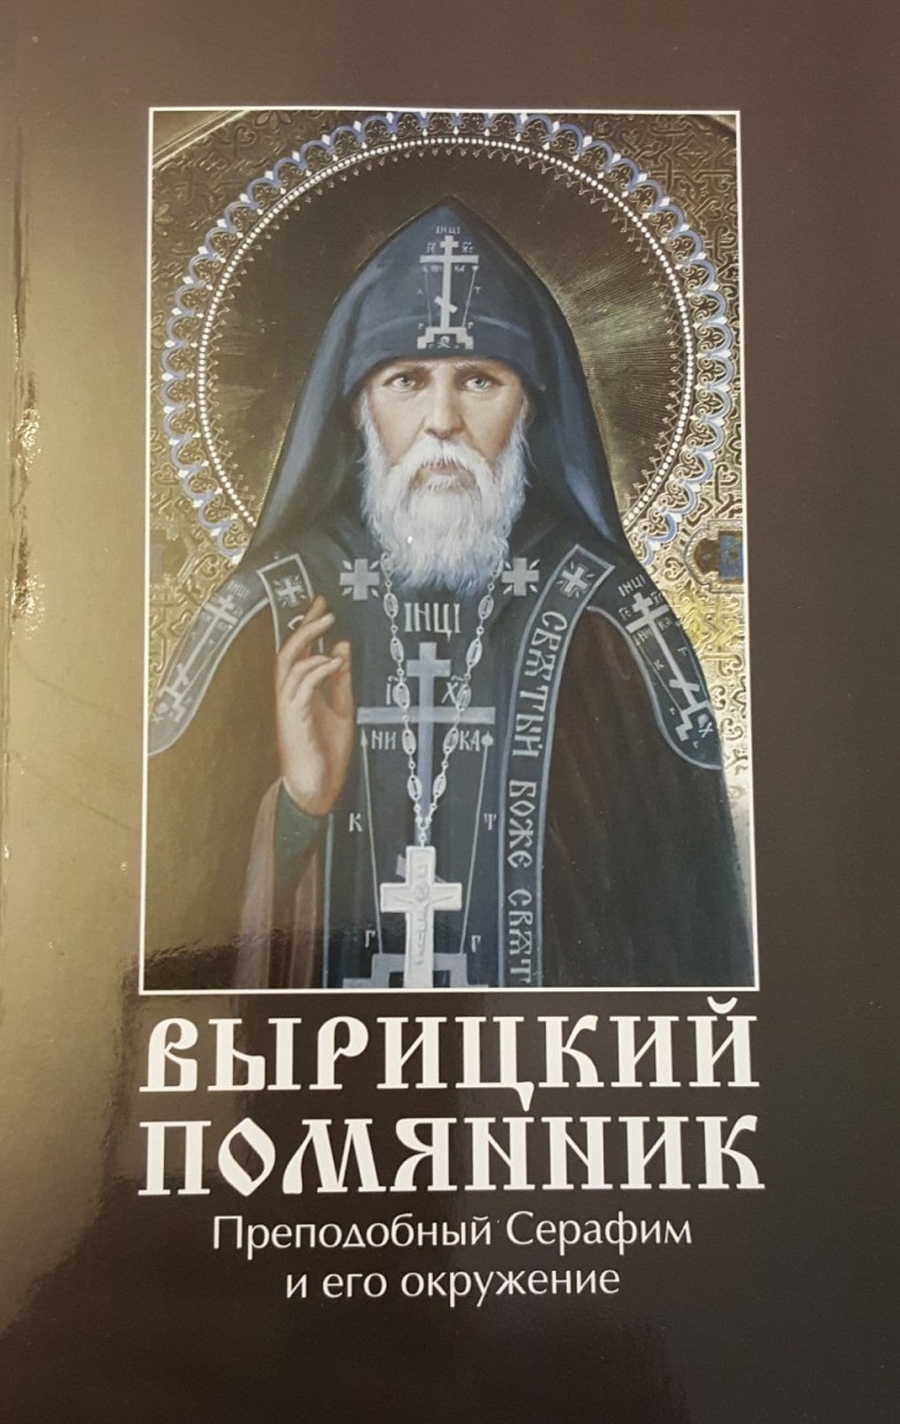 Гатчинцам презентовали книгу о преподобном Серафиме Вырицком